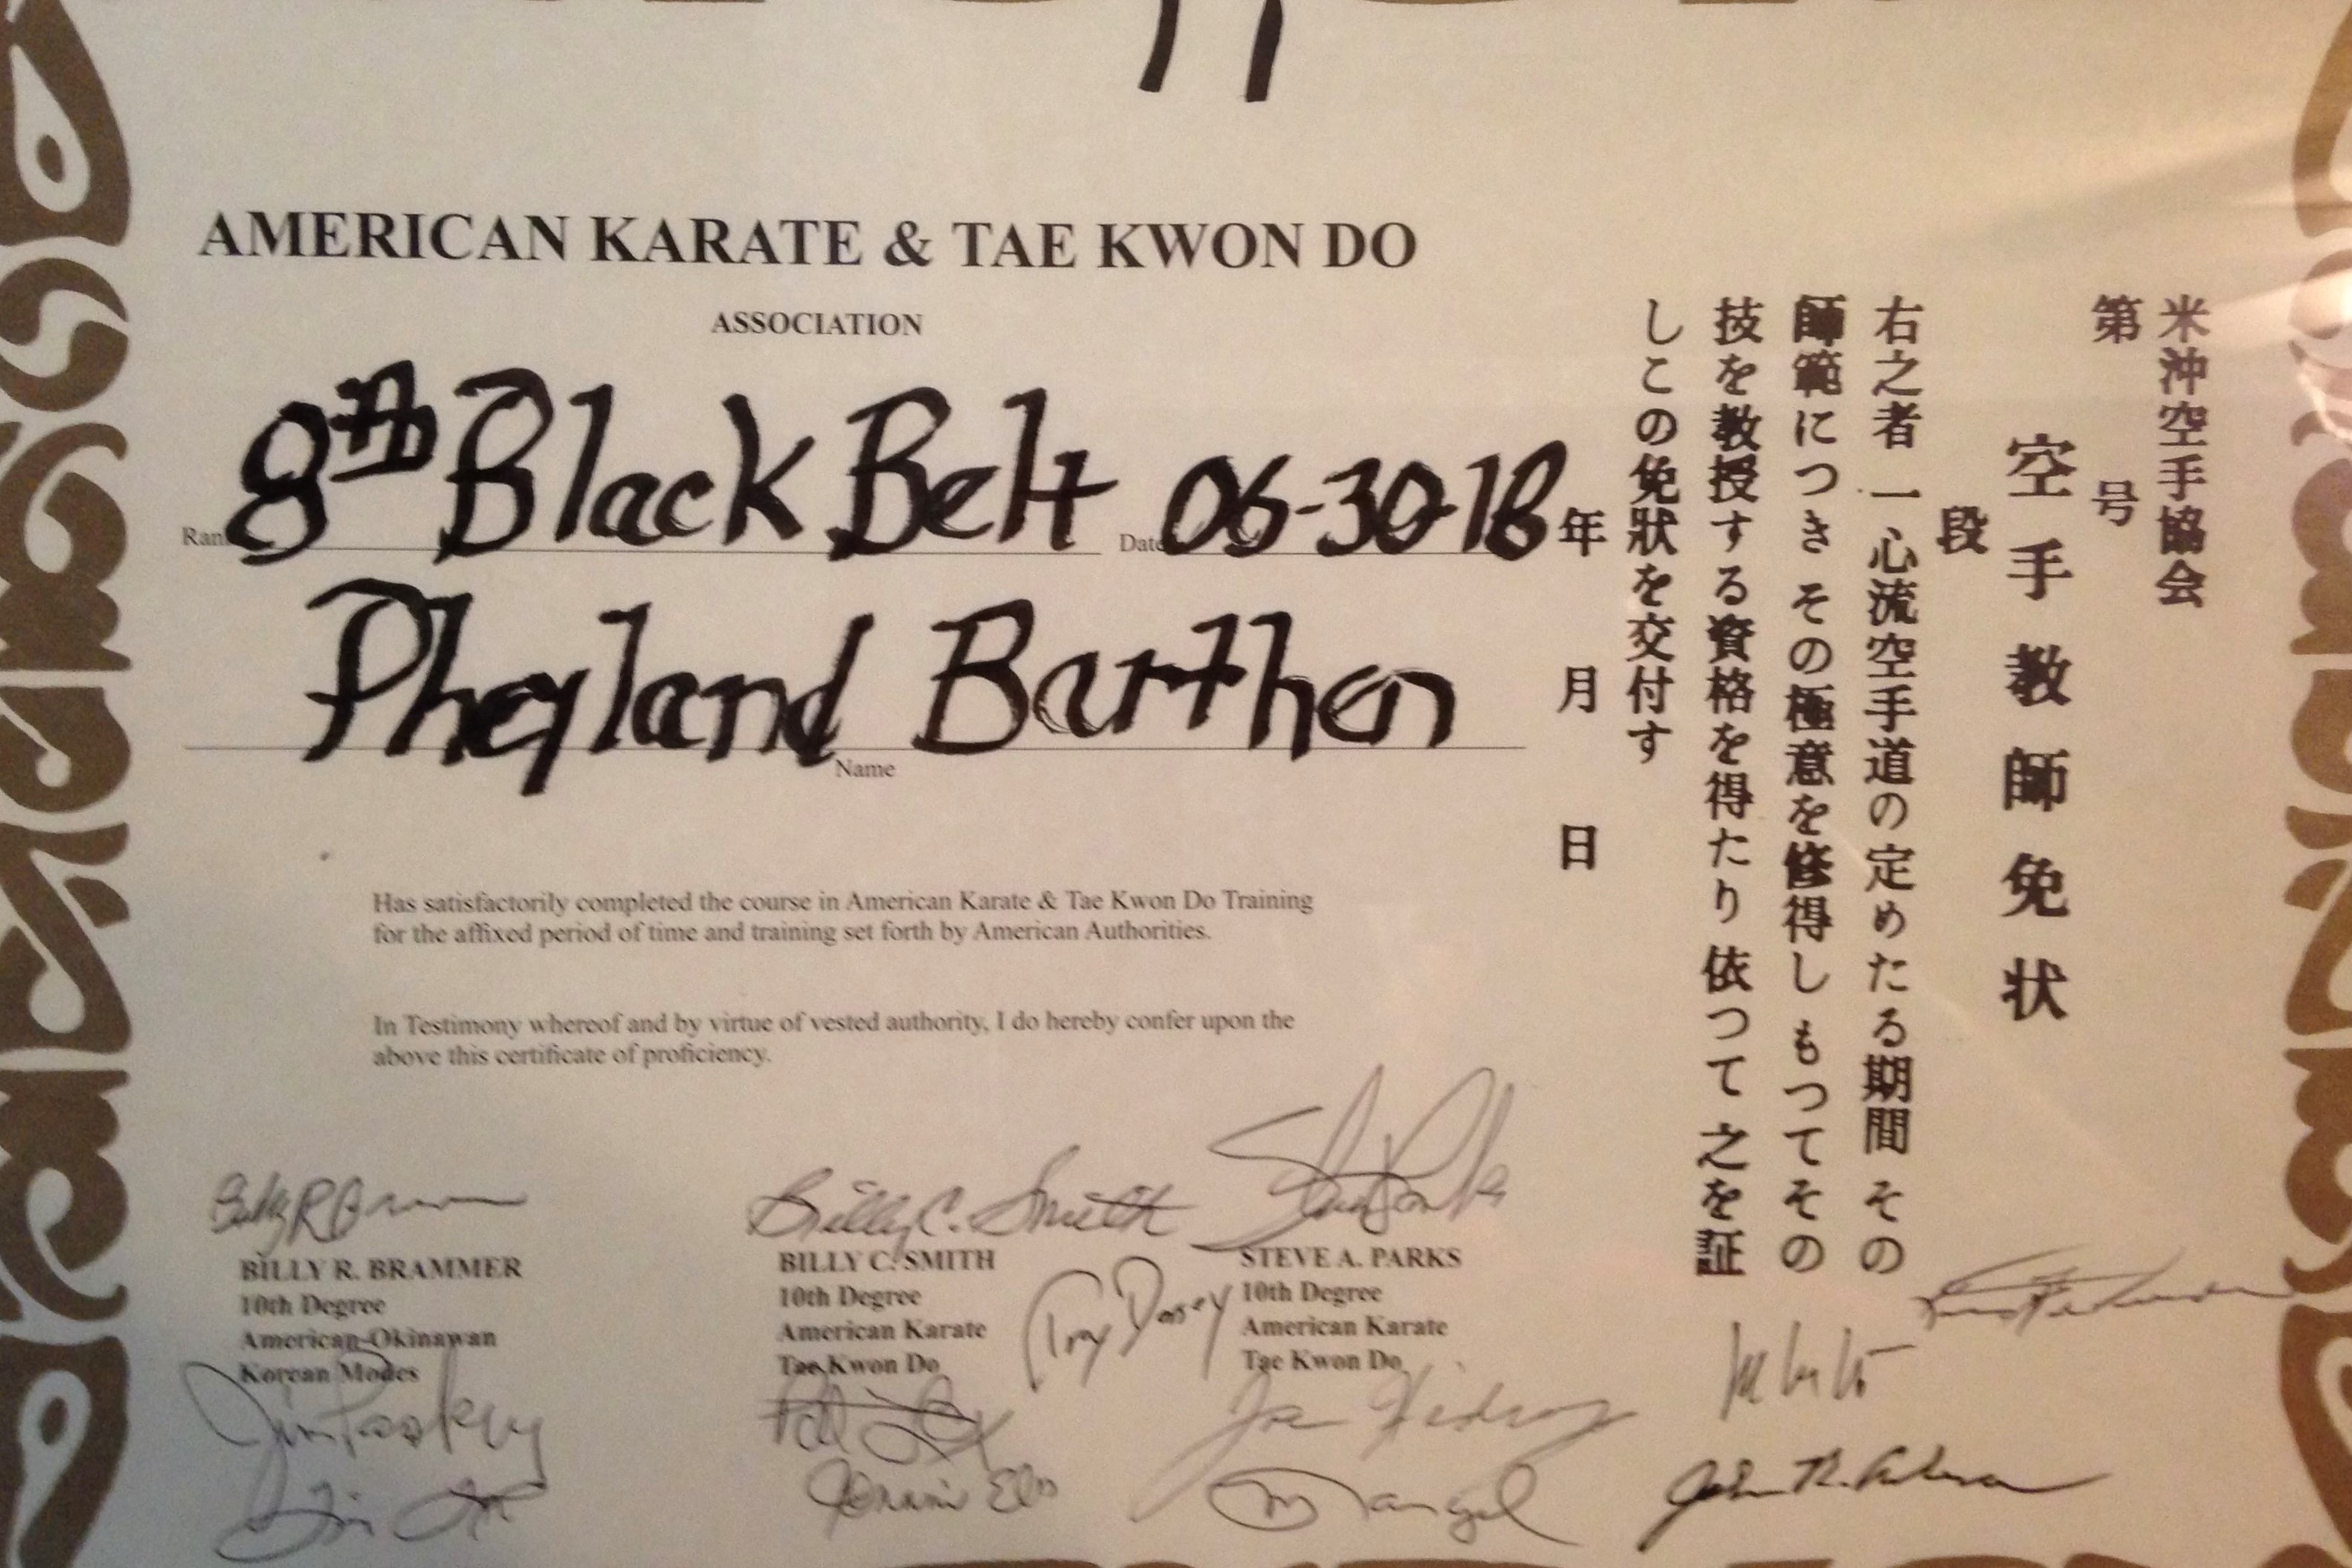 Pheyland Barthen's 8th degree black belt certificate